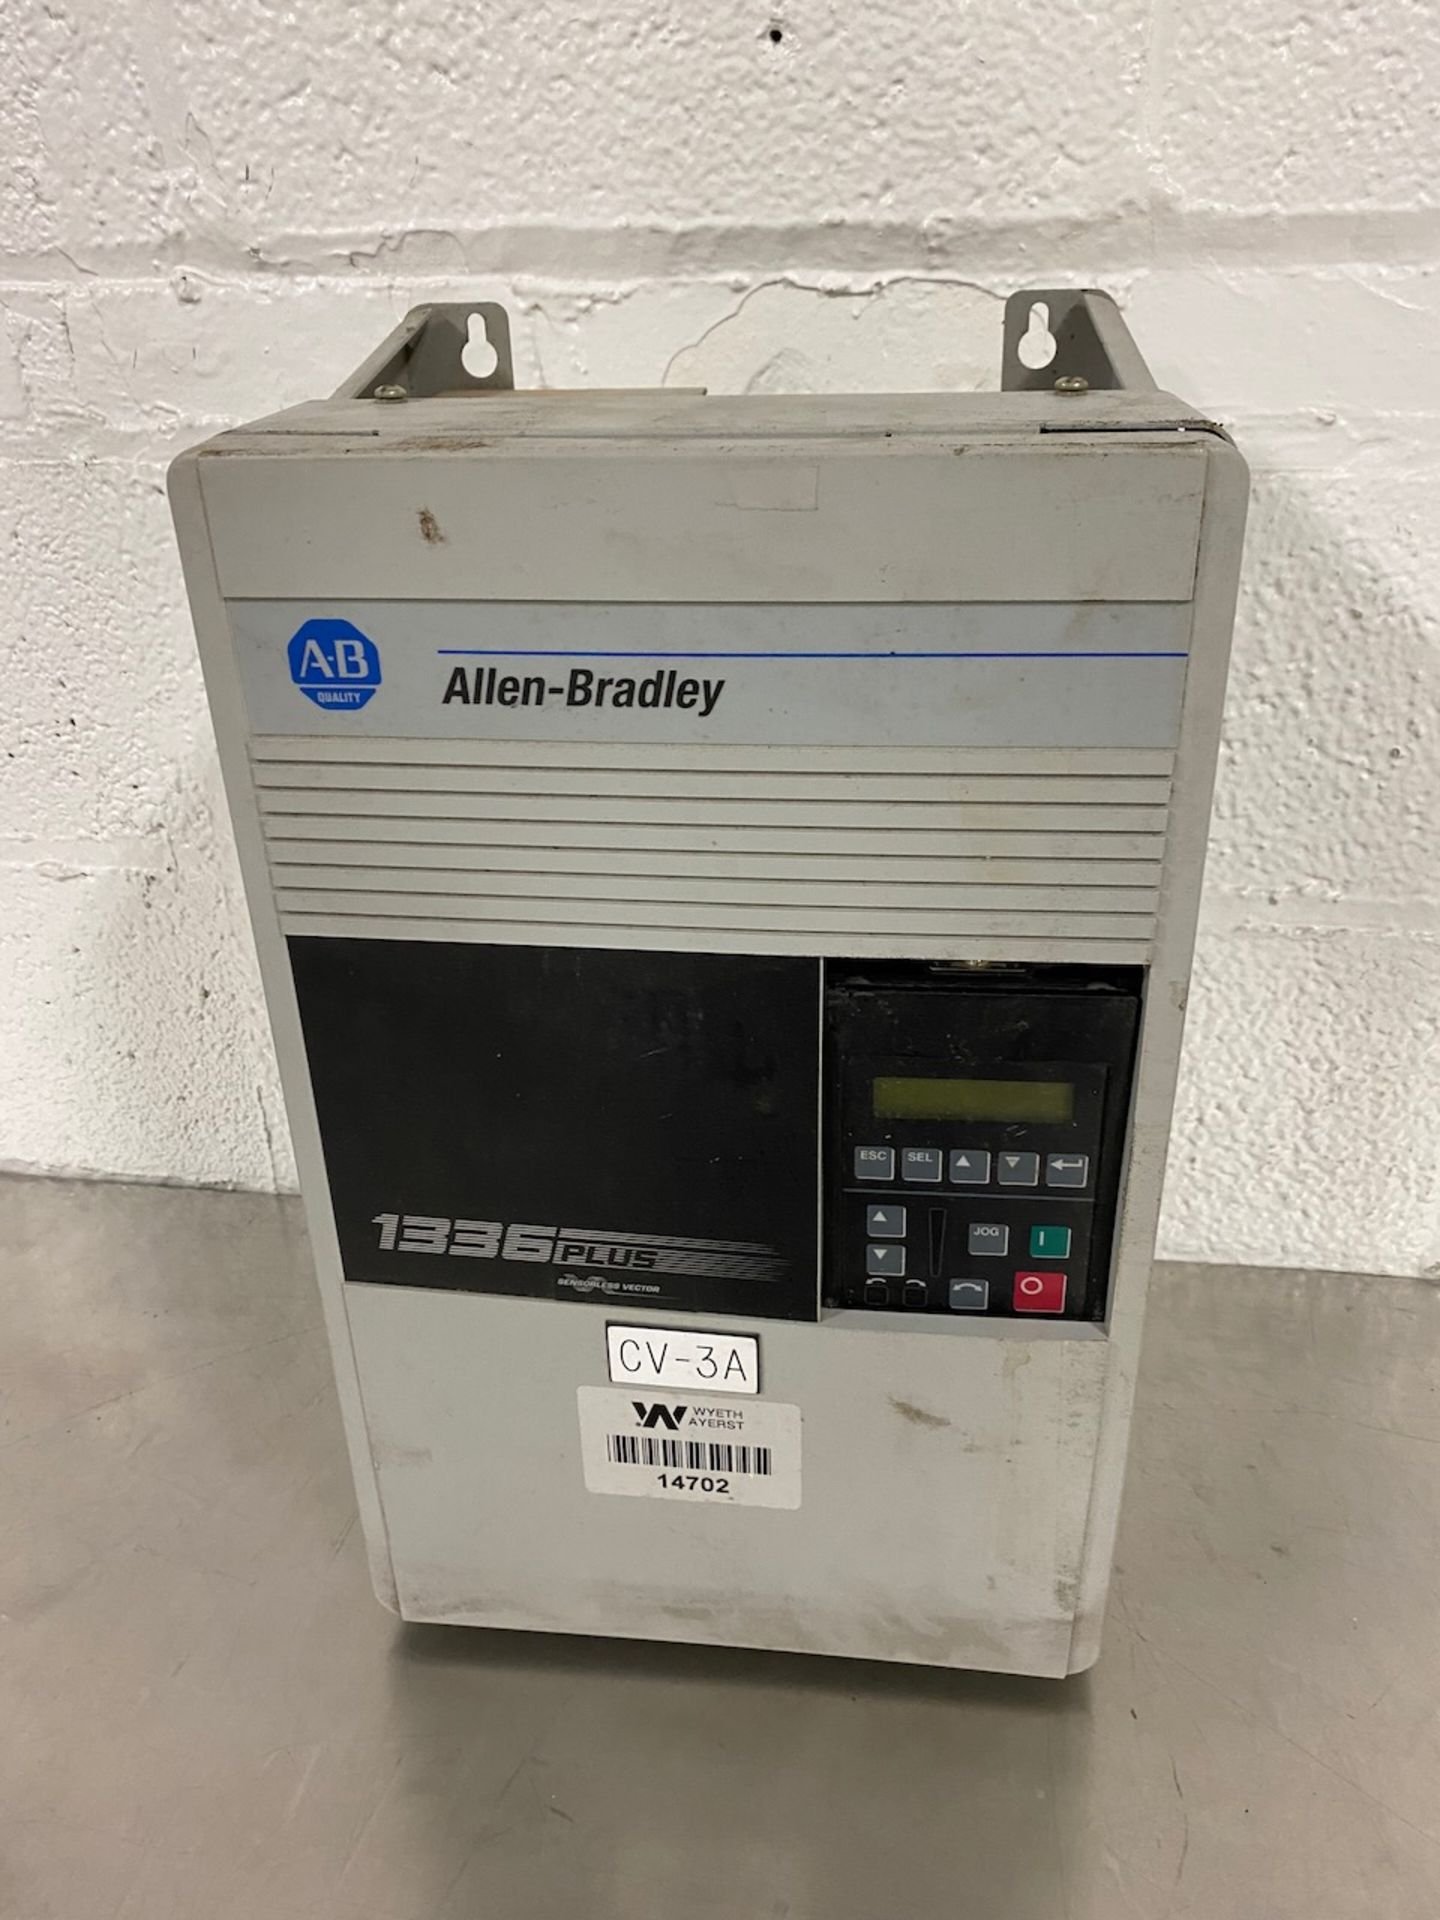 Allen Bradley 1336 Plus Controller